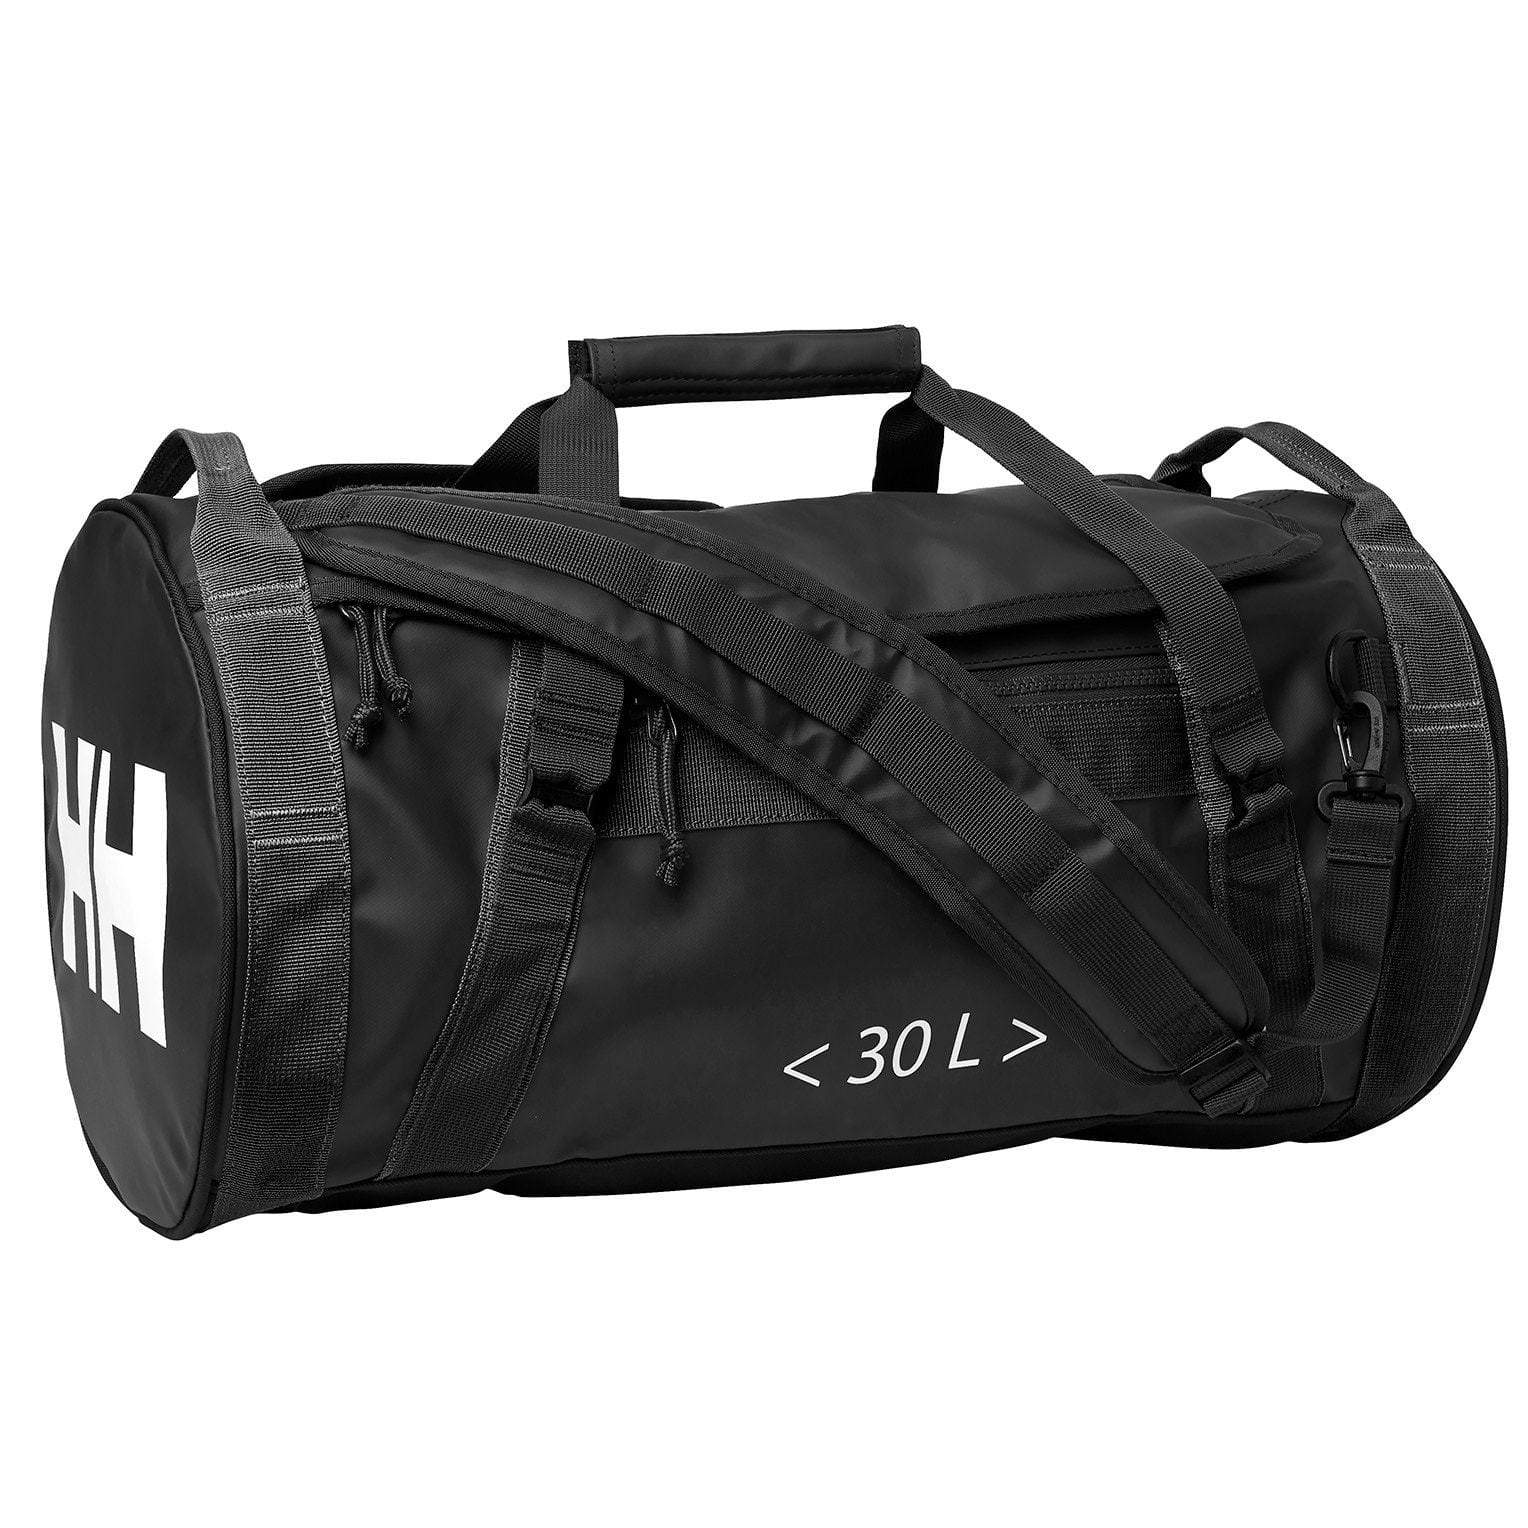 Helly Hansen Bags One Size / Black Helly Hansen - HH Duffel Bag 2 30L